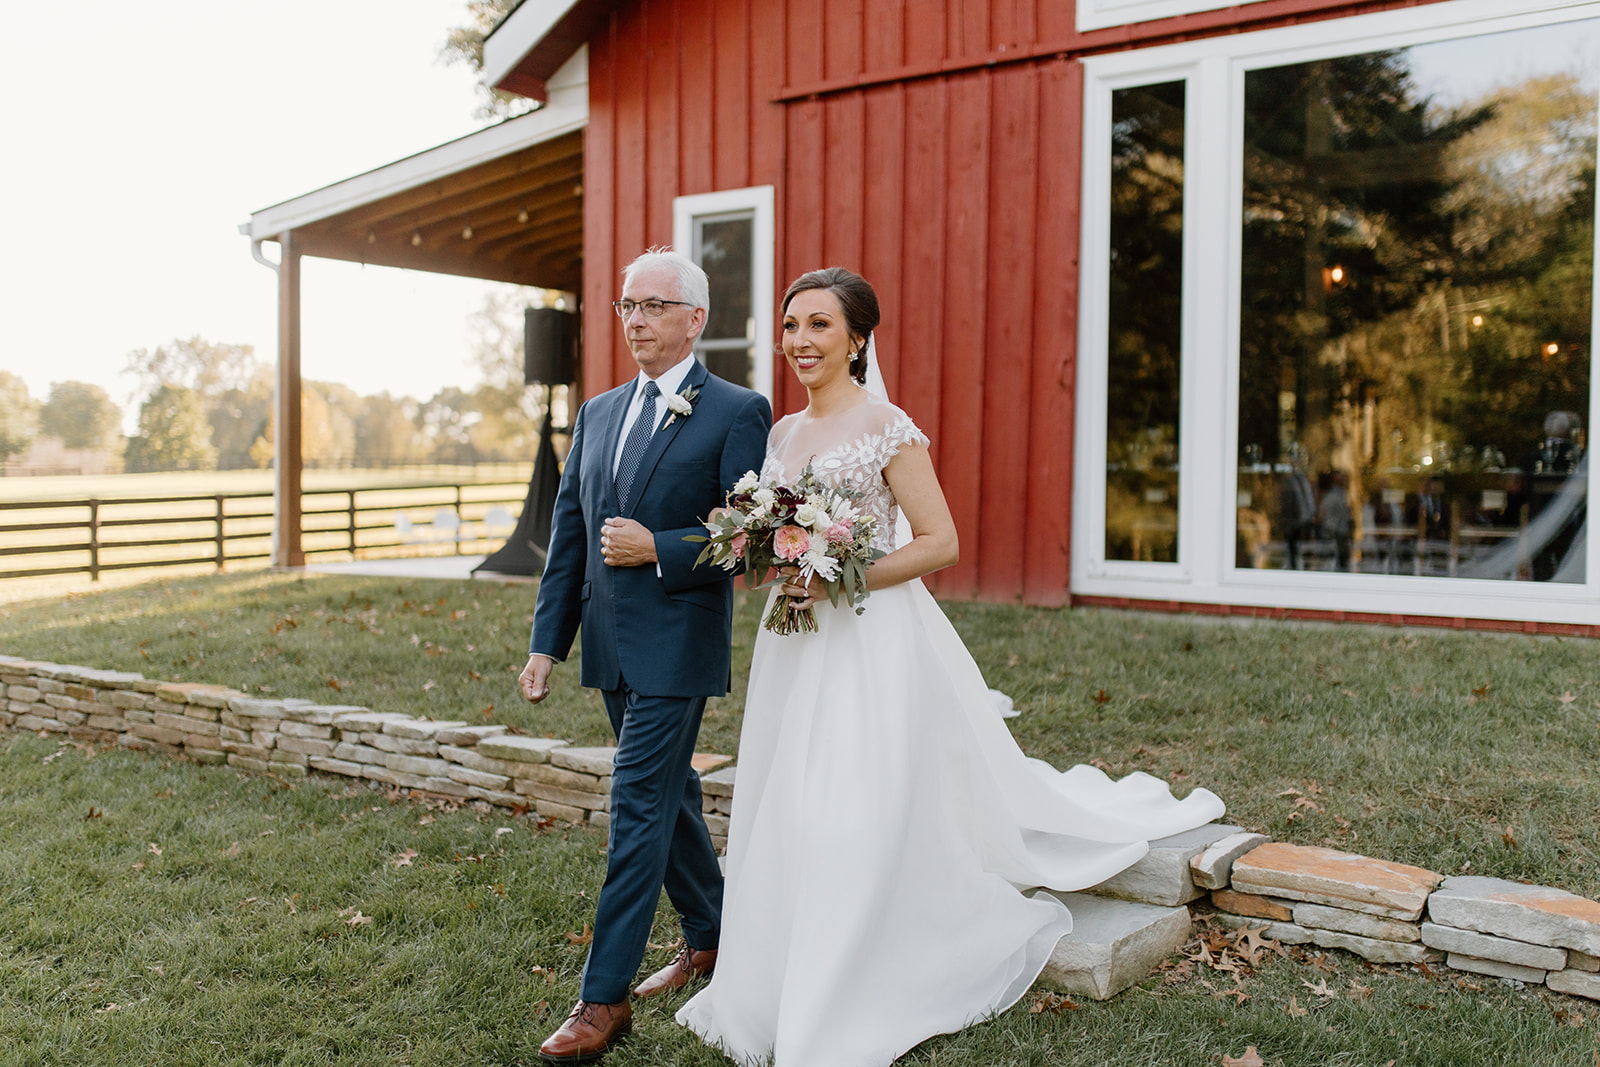 Cedarmont Farm Wedding with Fall Colors